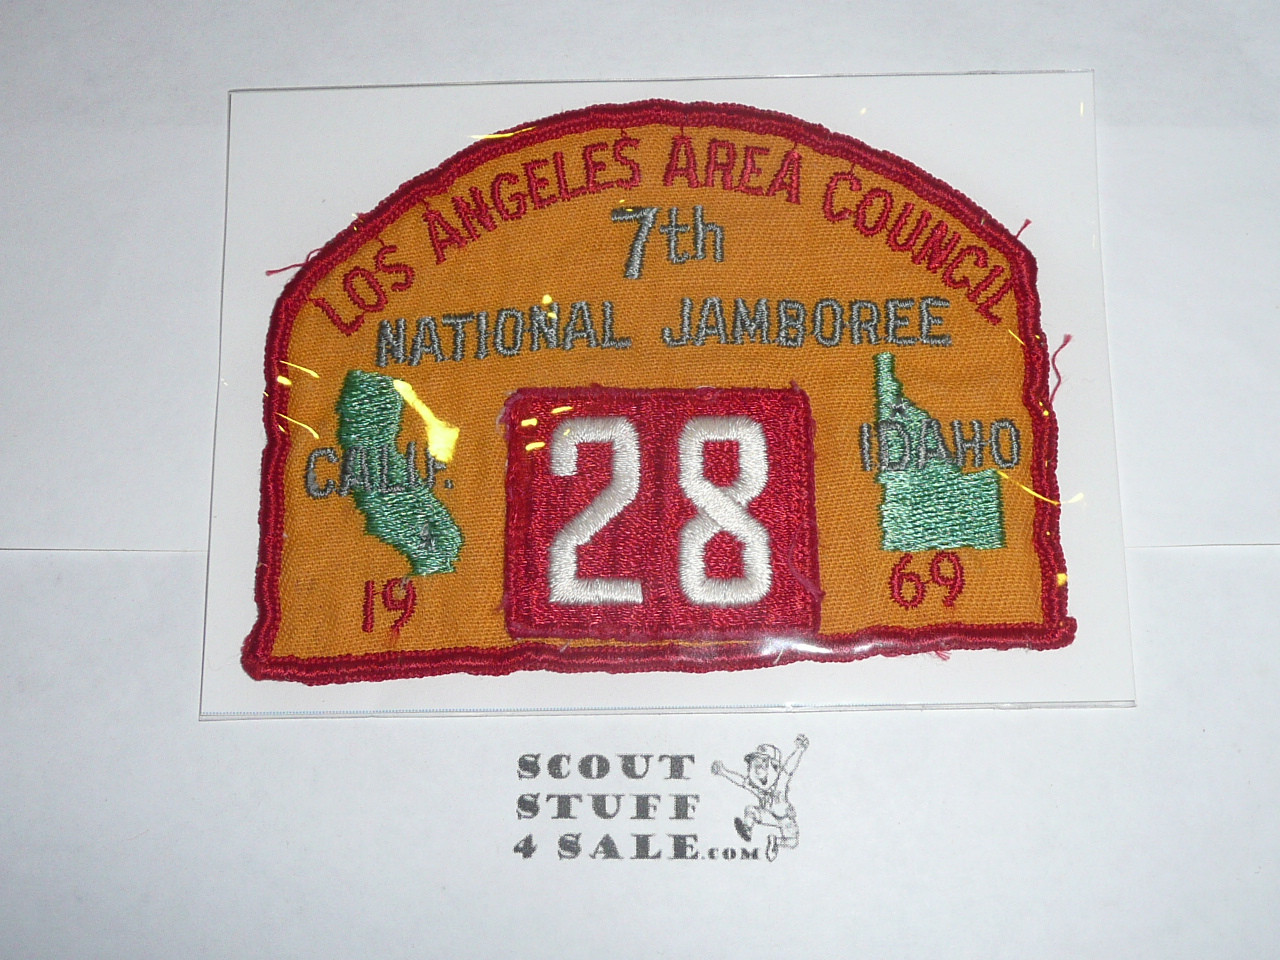 1969 National Jamboree JSP - Los Angeles Area Council, Troop 28, sewn